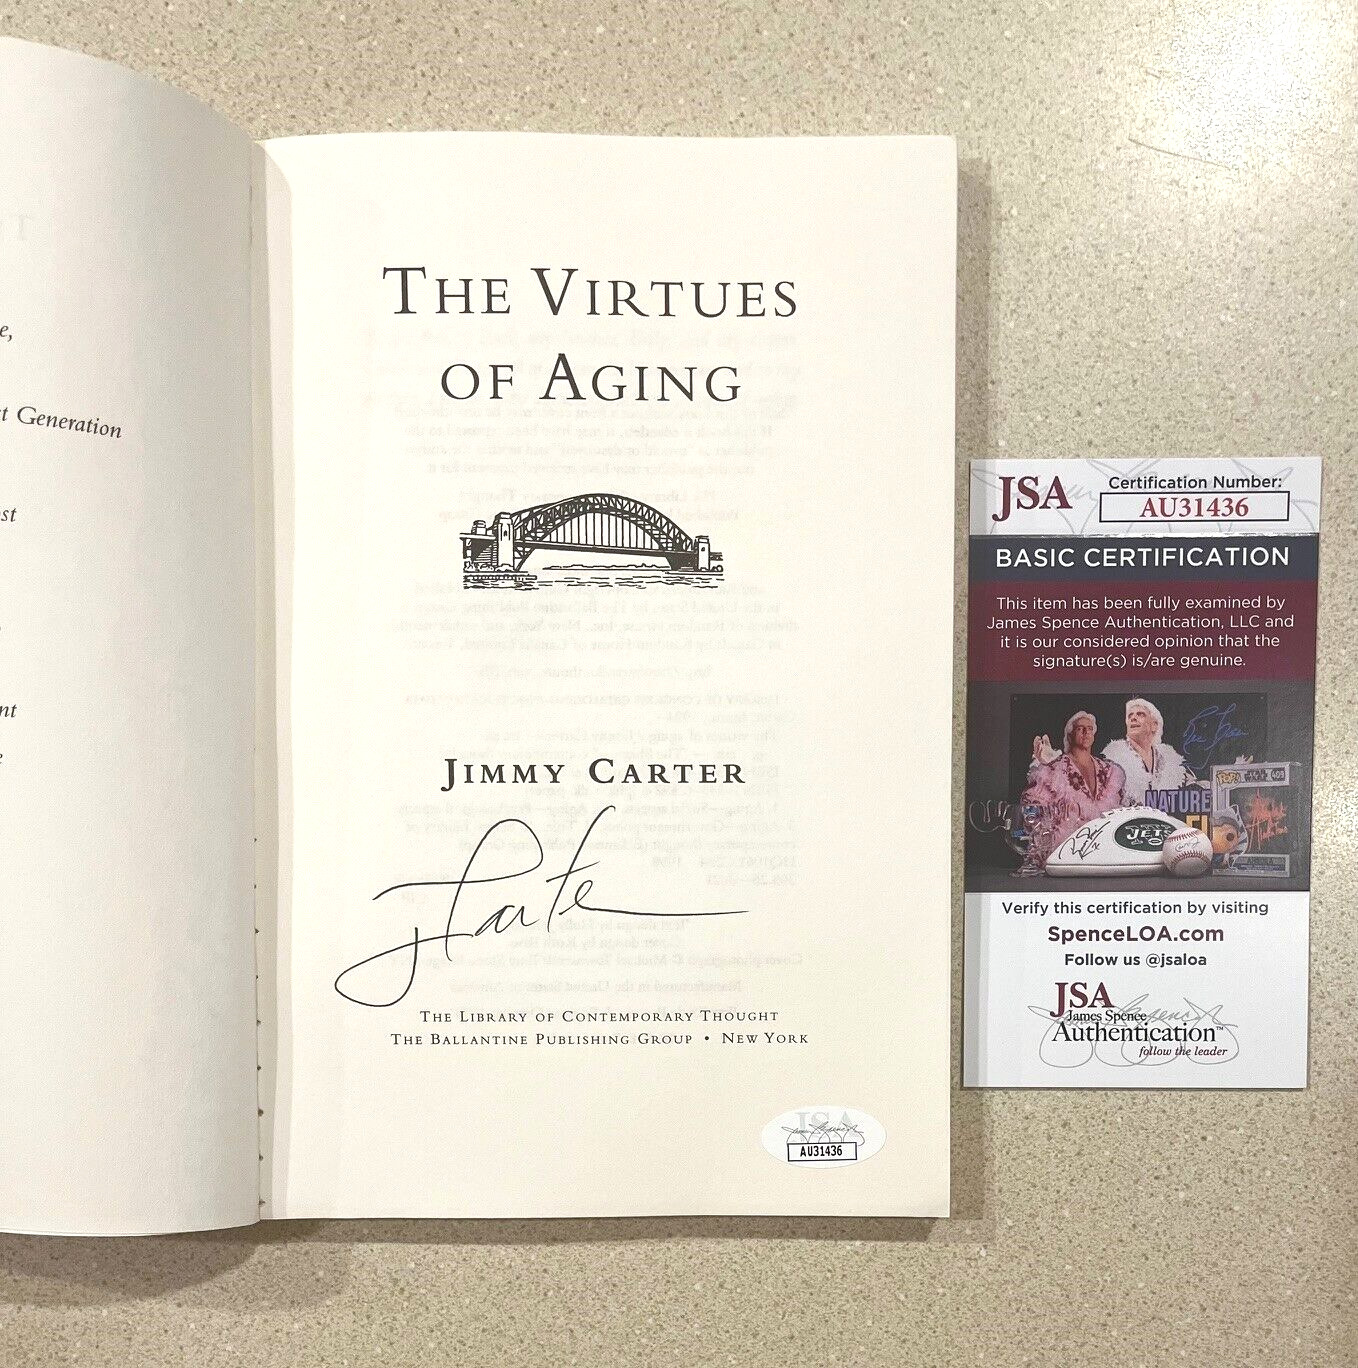 PRESIDENT JIMMY CARTER signed Book 